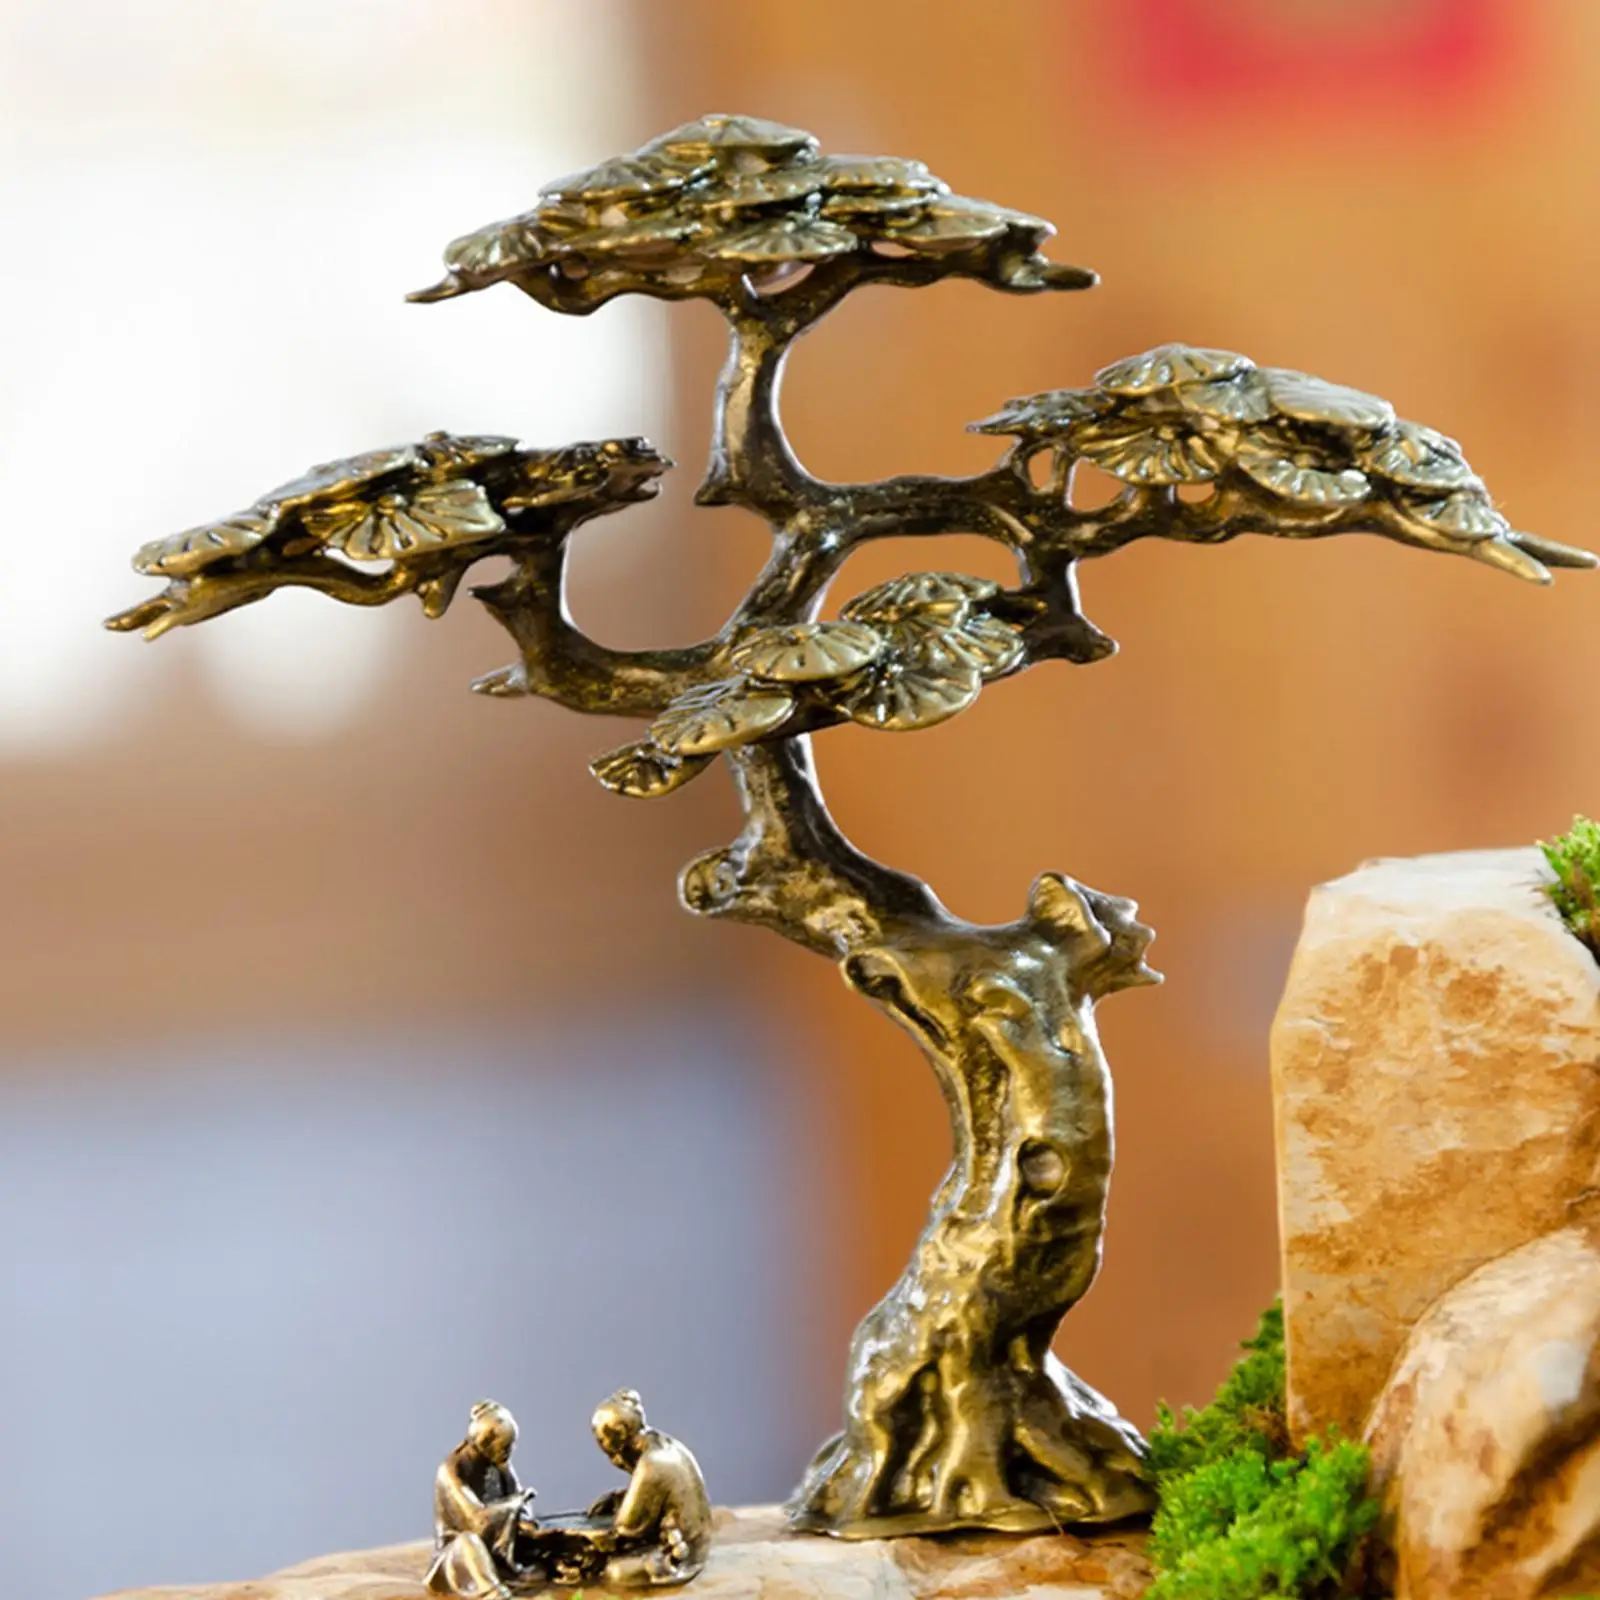 Mini Pine Miniature Figurine Small Faux Tree Decor Antique Tree Statue for Bonsai Tabletop Micro Landscape Indoor Decoration